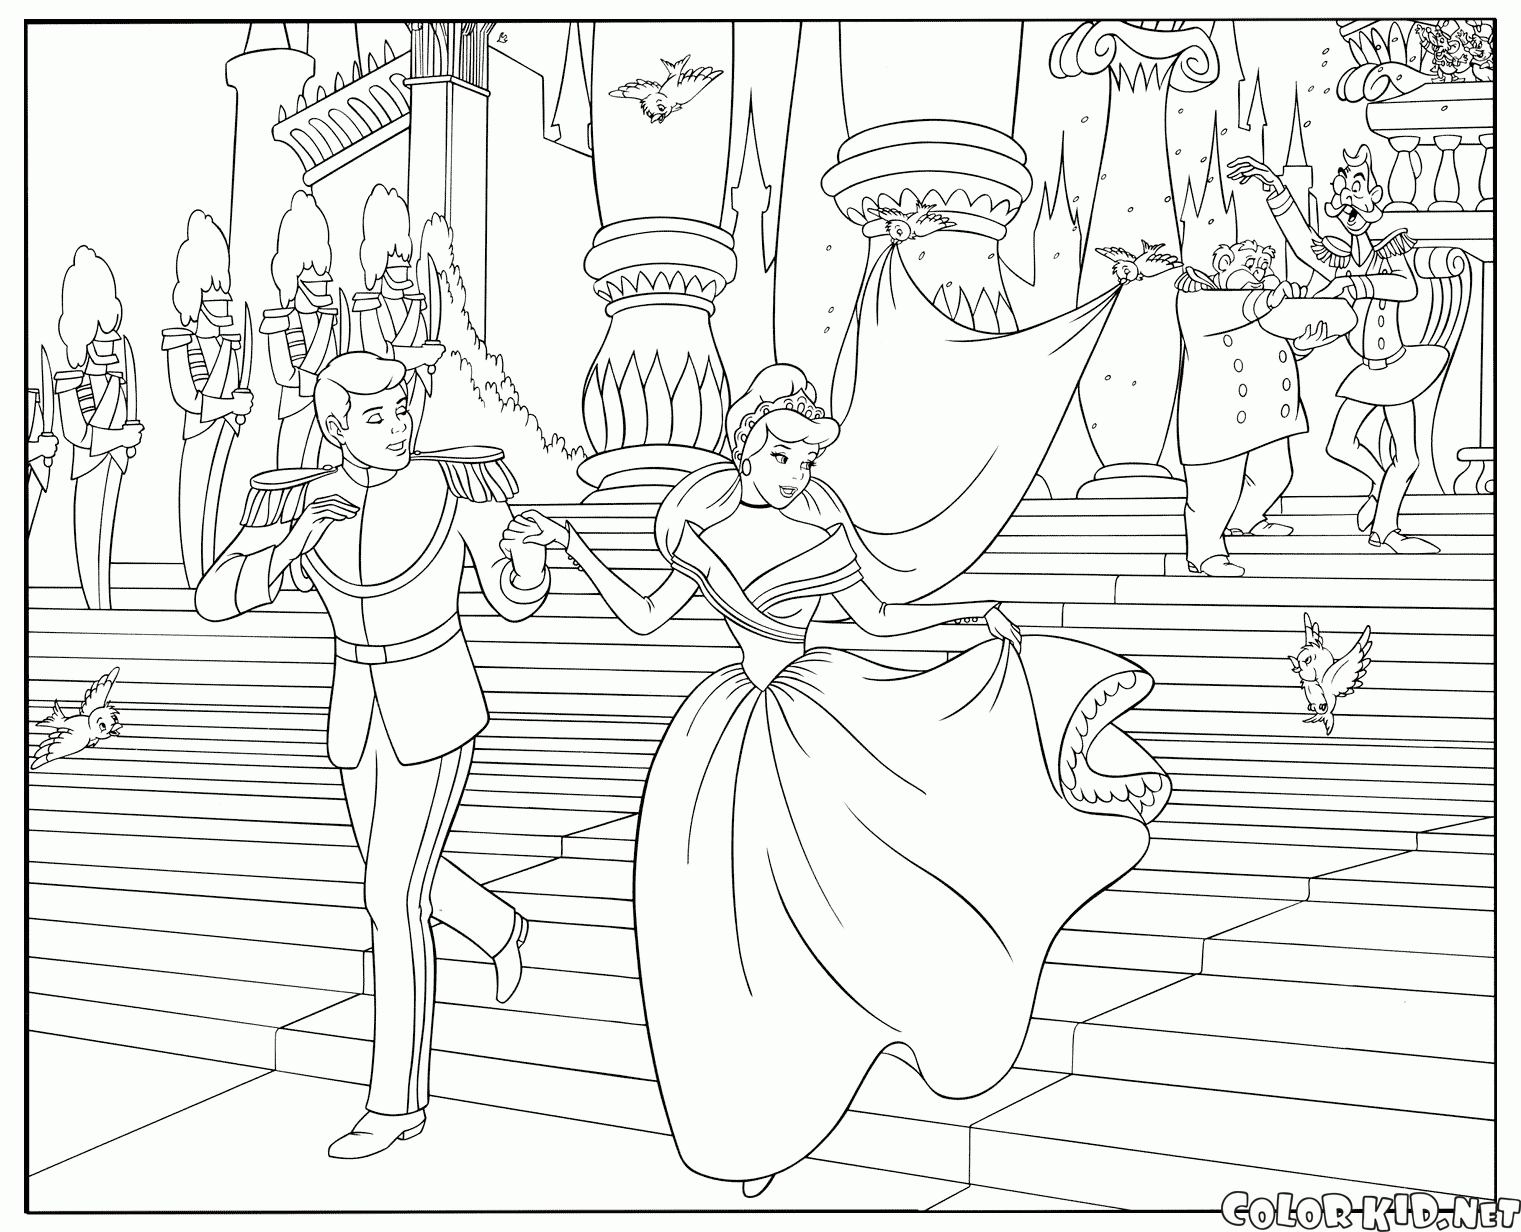 The wedding of Cinderella and Prince